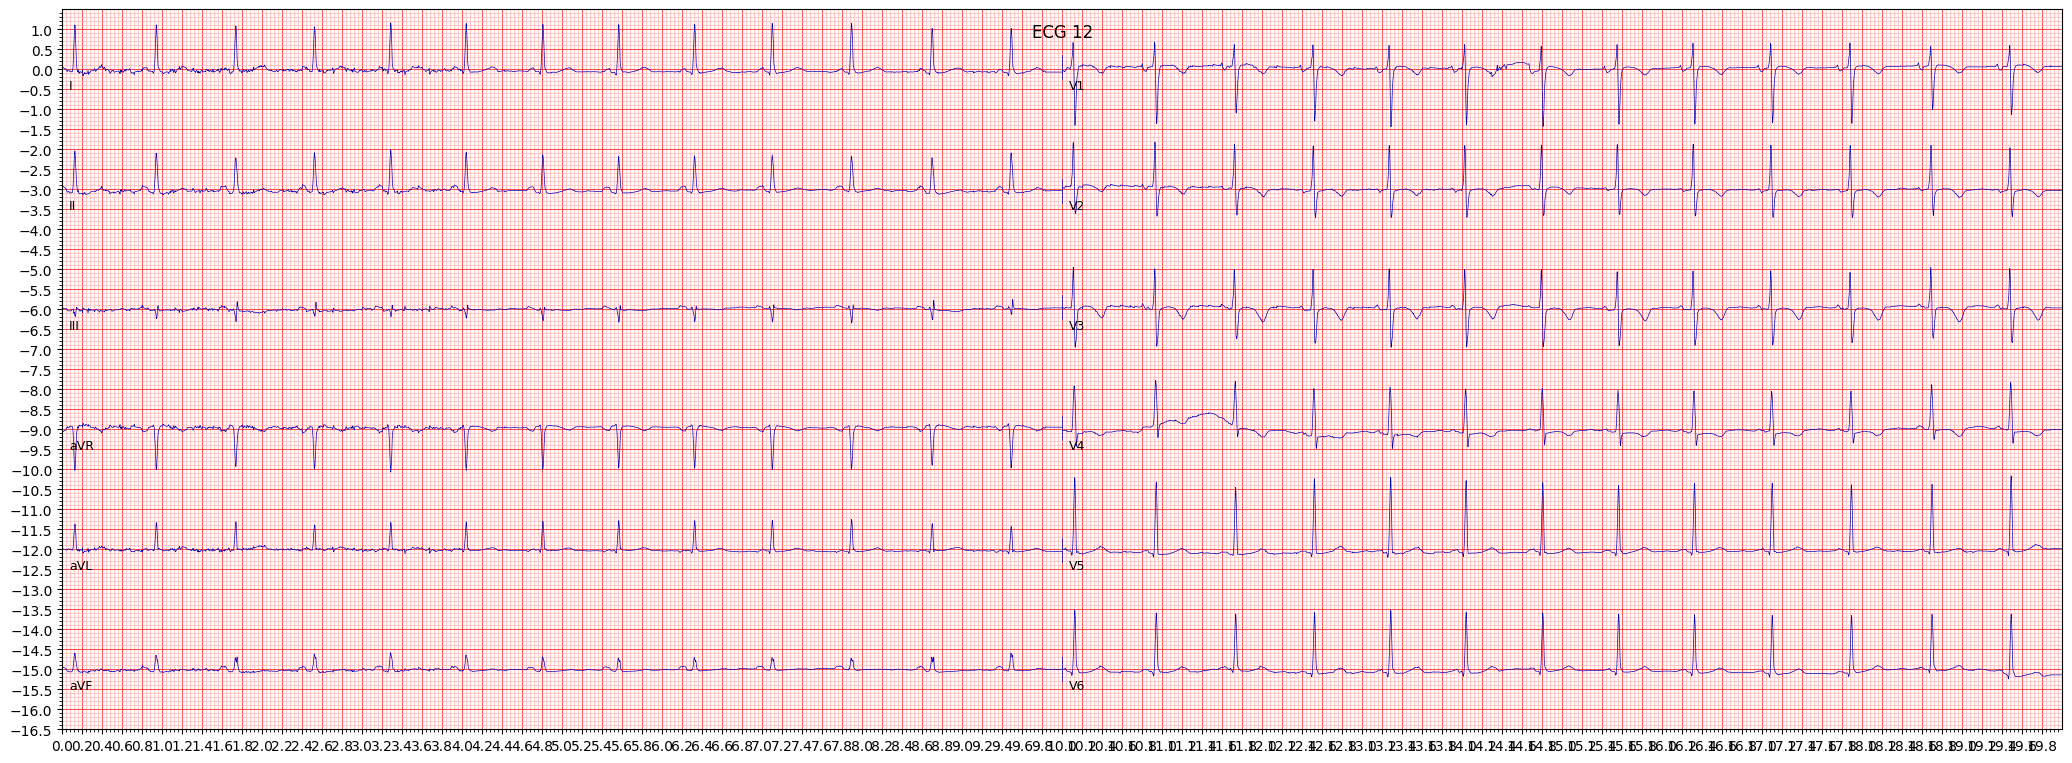 subendocardial injury in anteroseptal leads (INJAS) example 15746